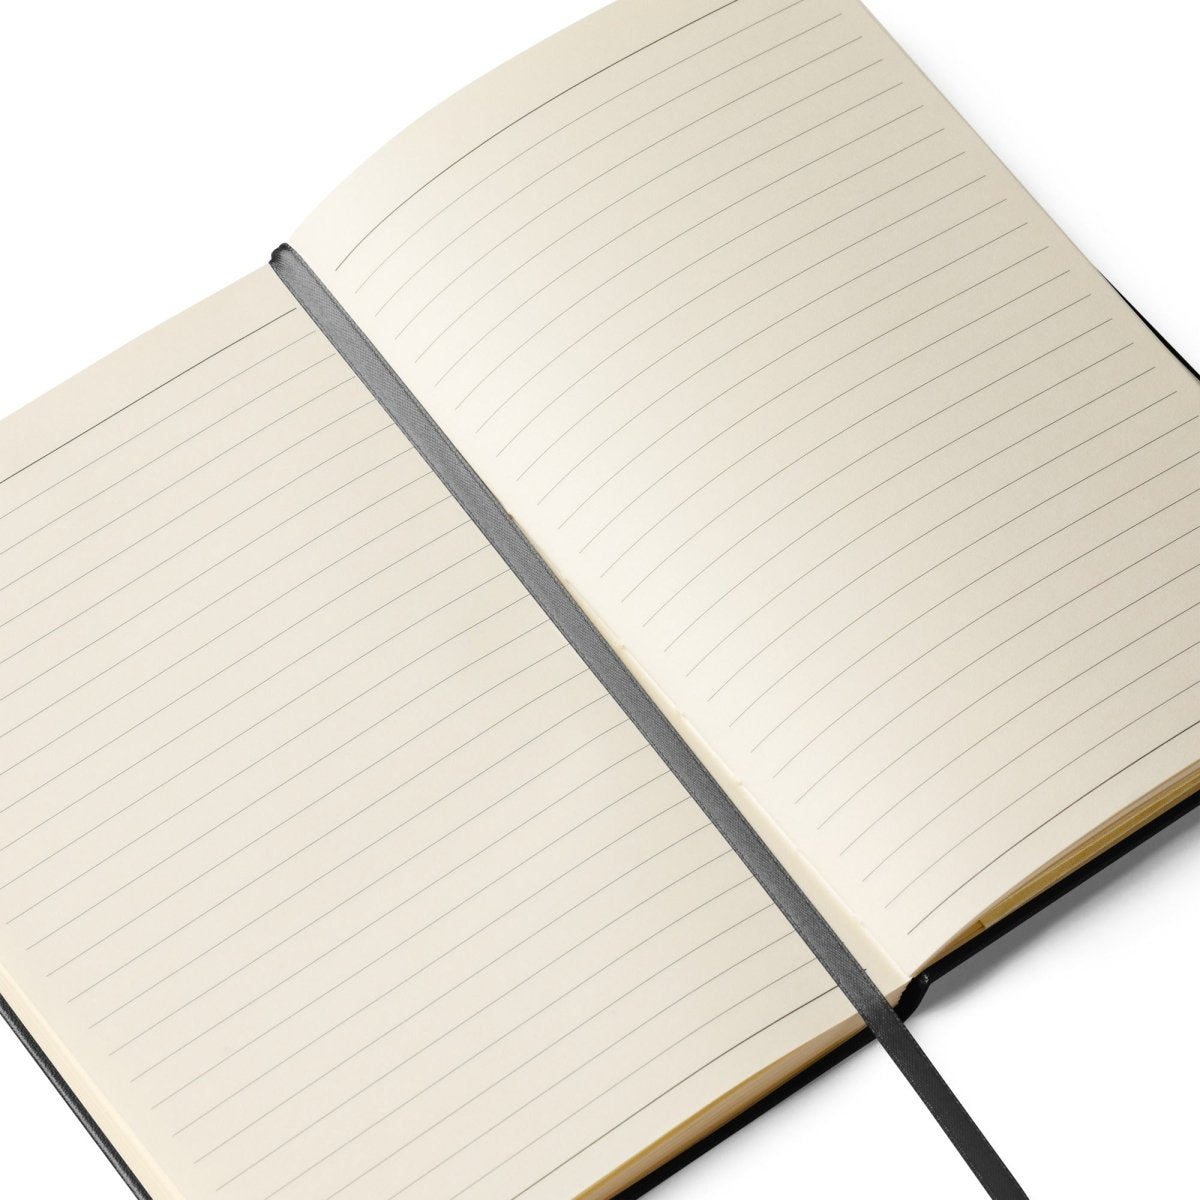 TensorFlow 1 Icon Hardcover Bound Notebook - Black - AI Store